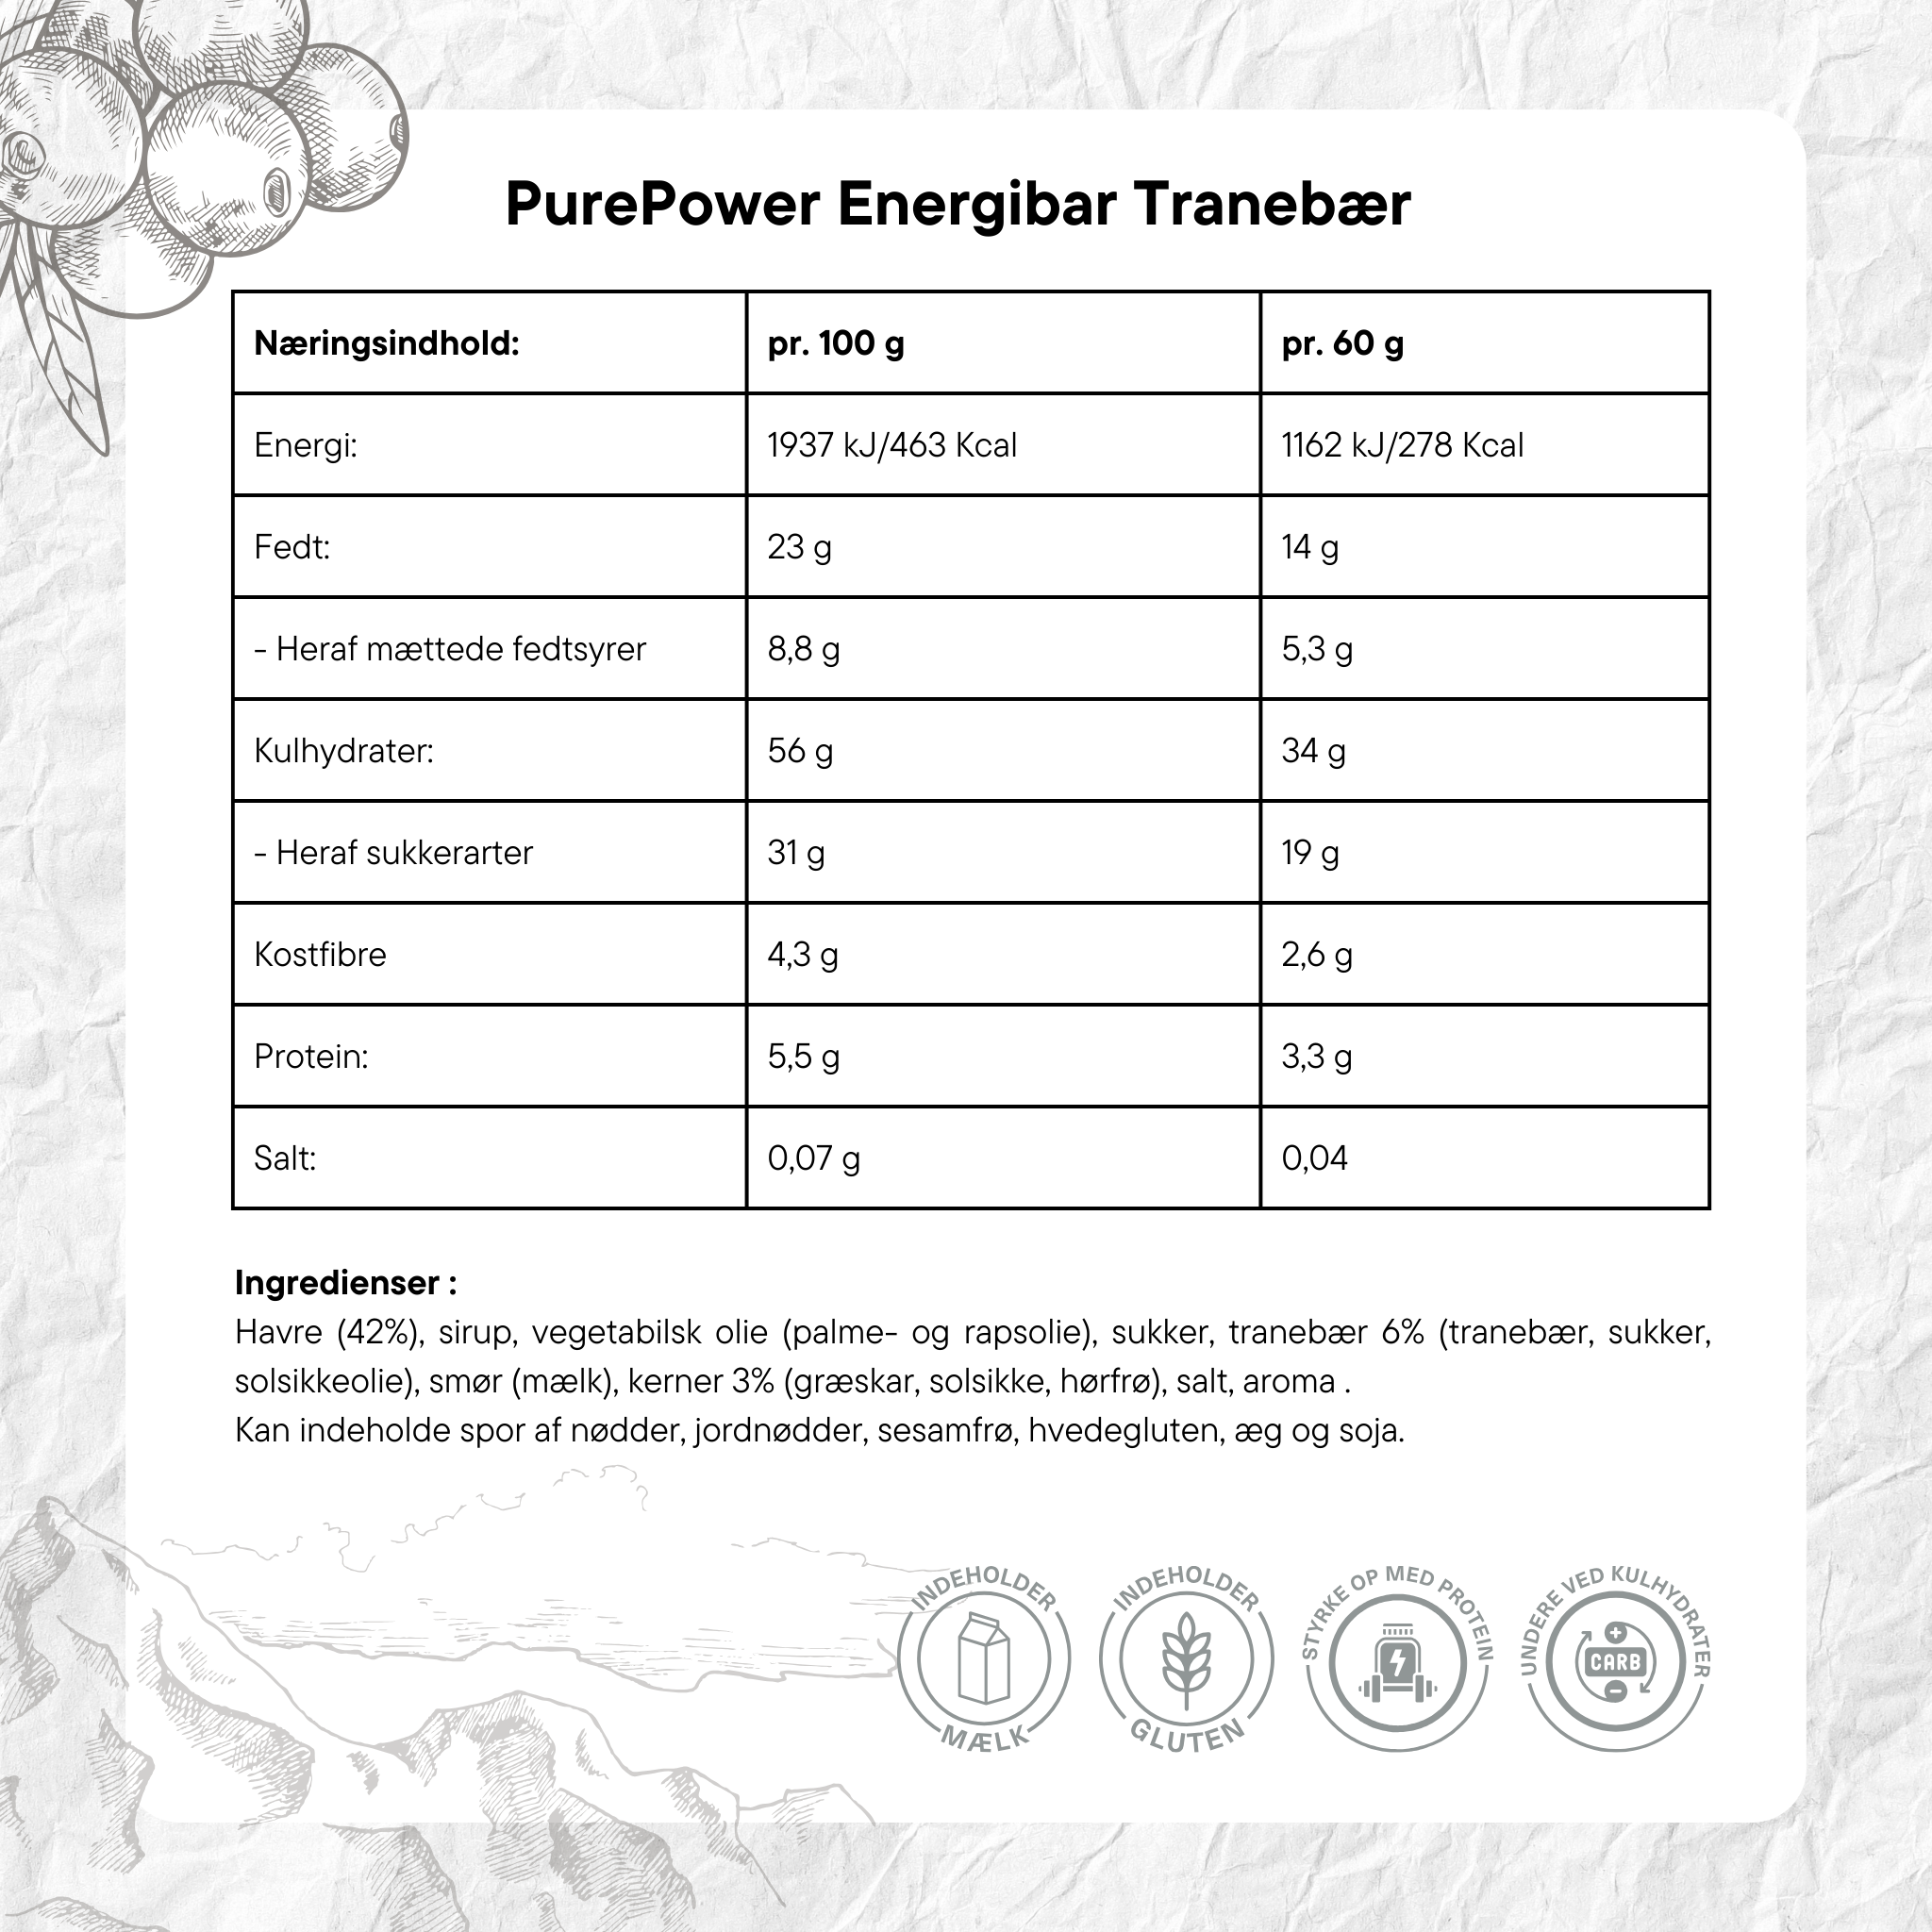 PurePower Energibar Tranebær (12x60g)